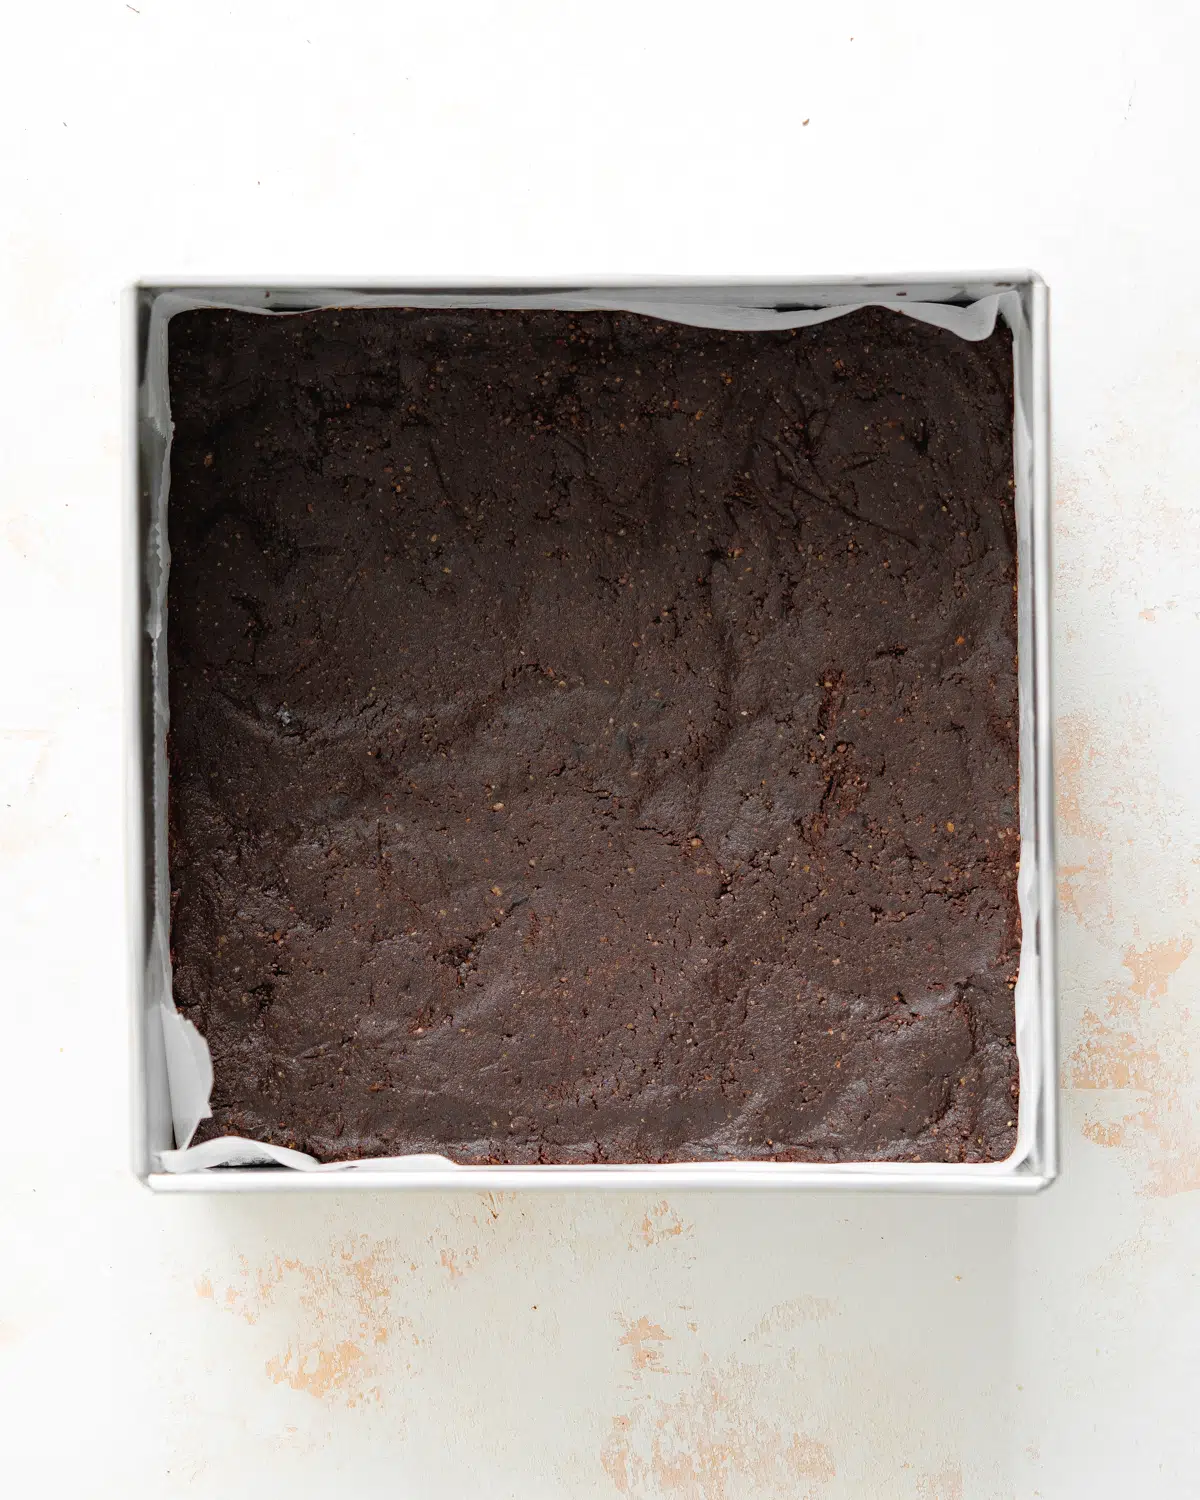 pressing brownie dough into cake pan.